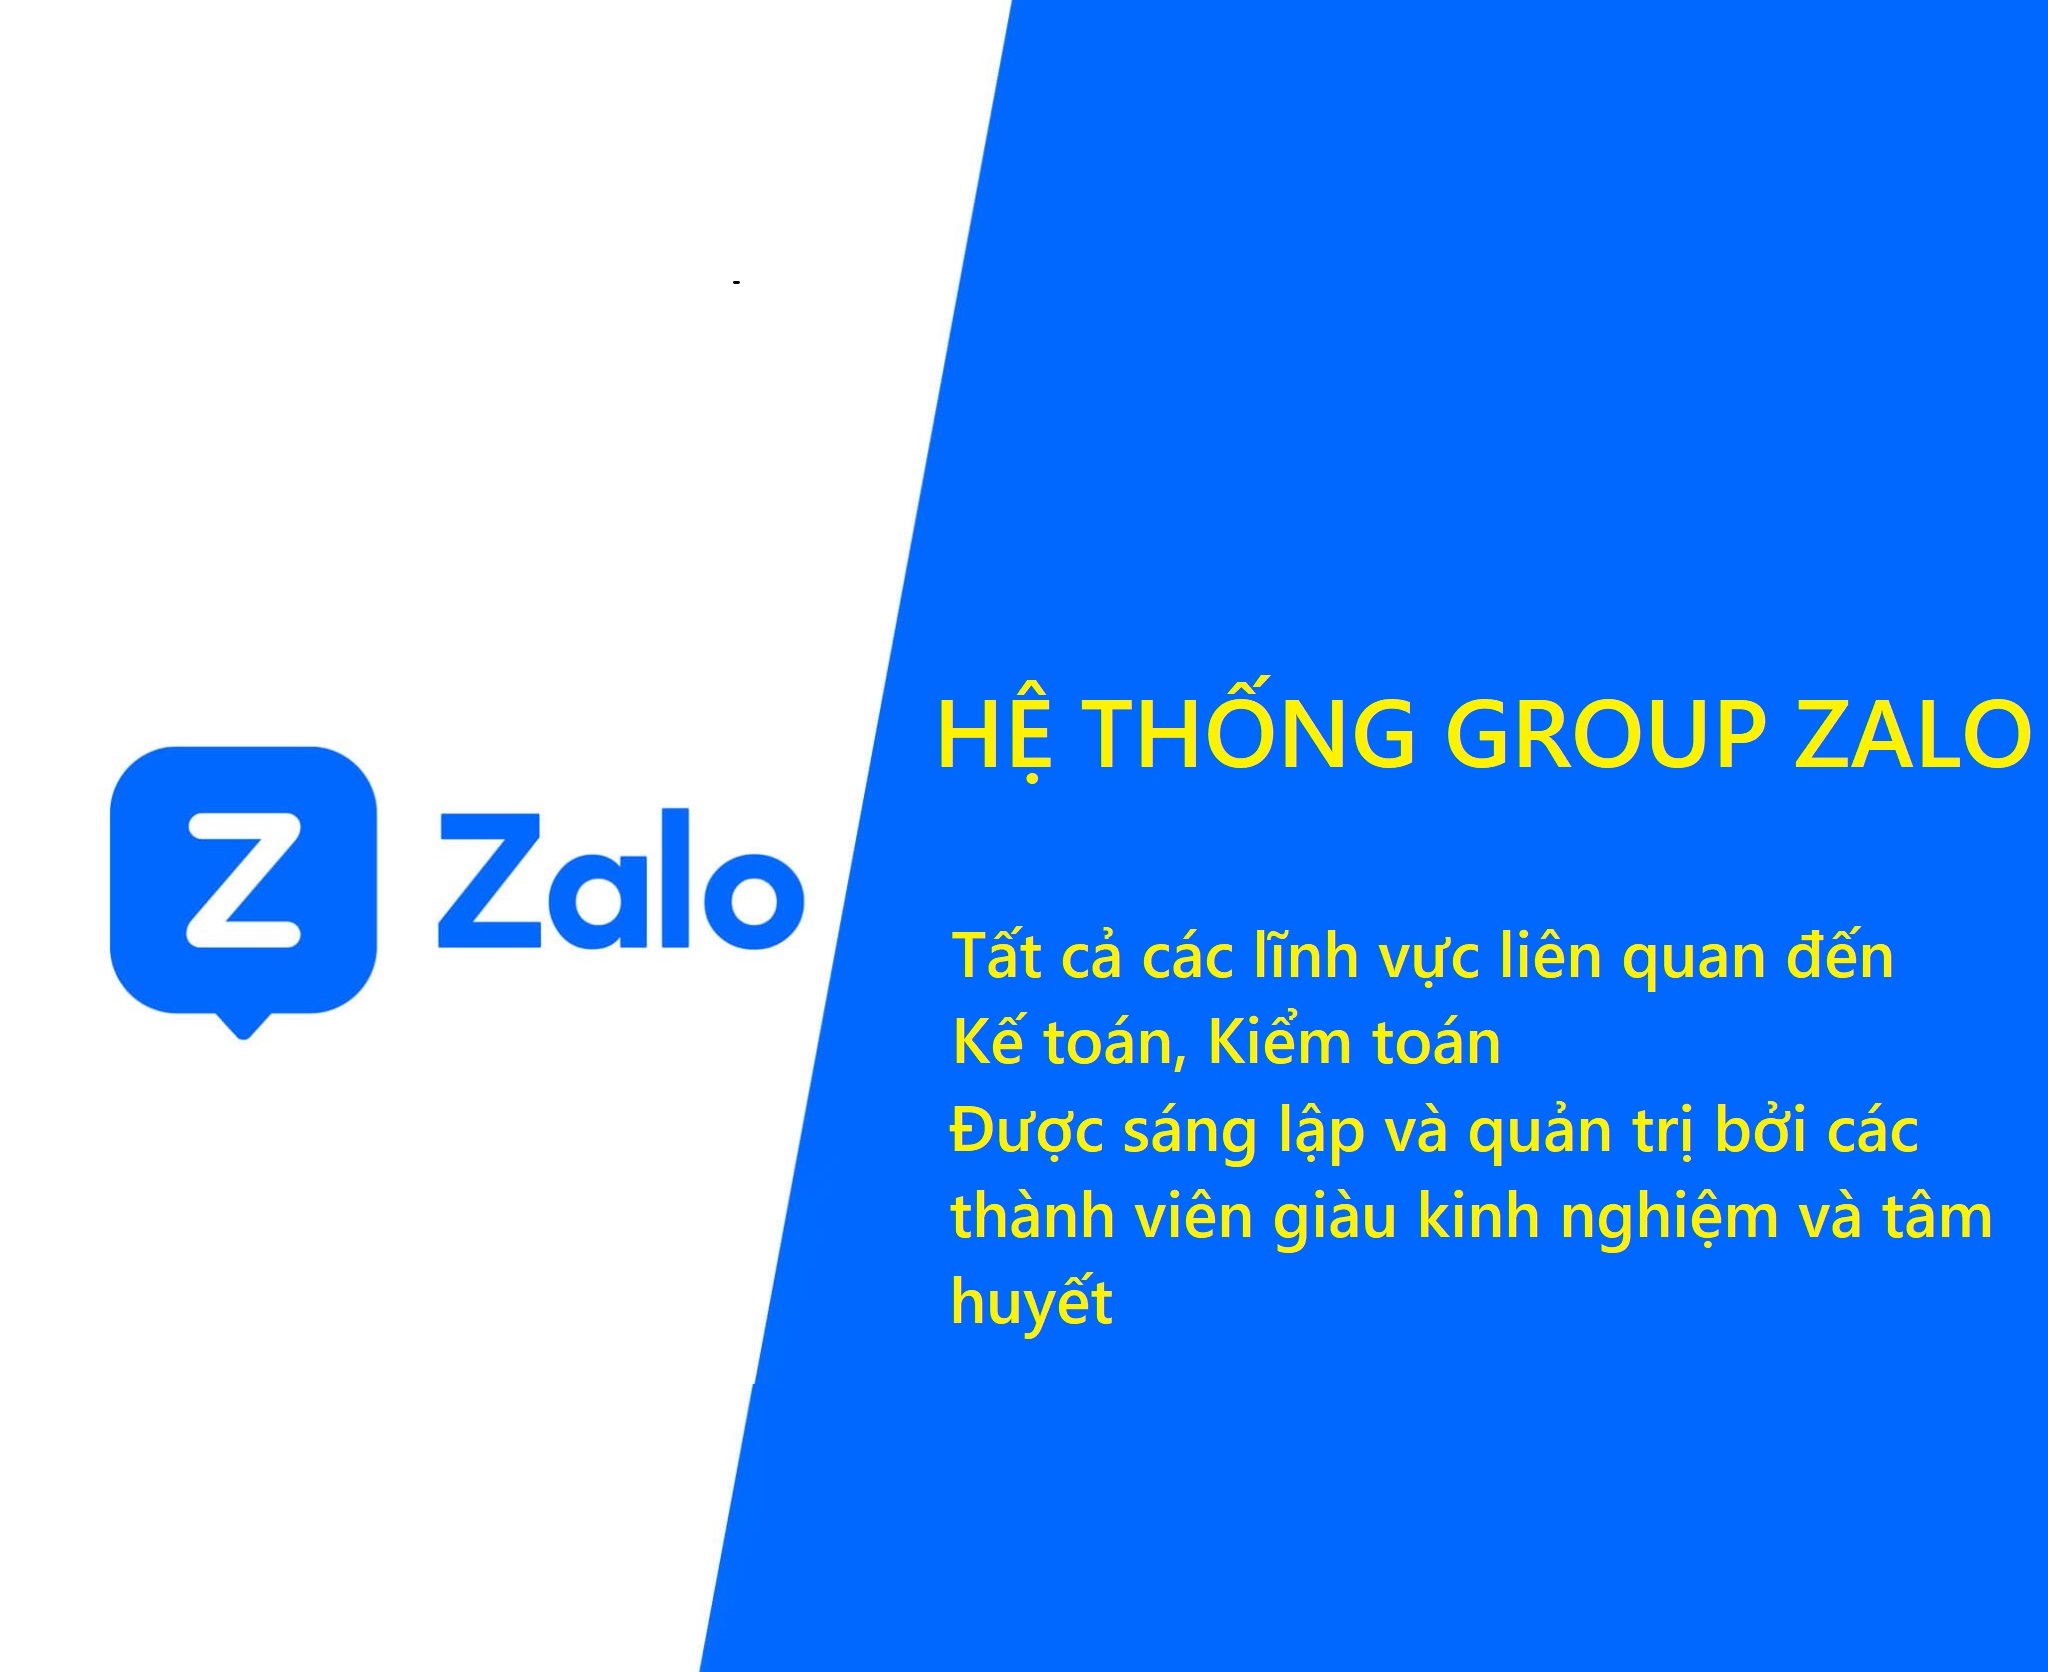 He Thong Group Zalo Cho Ke Toan